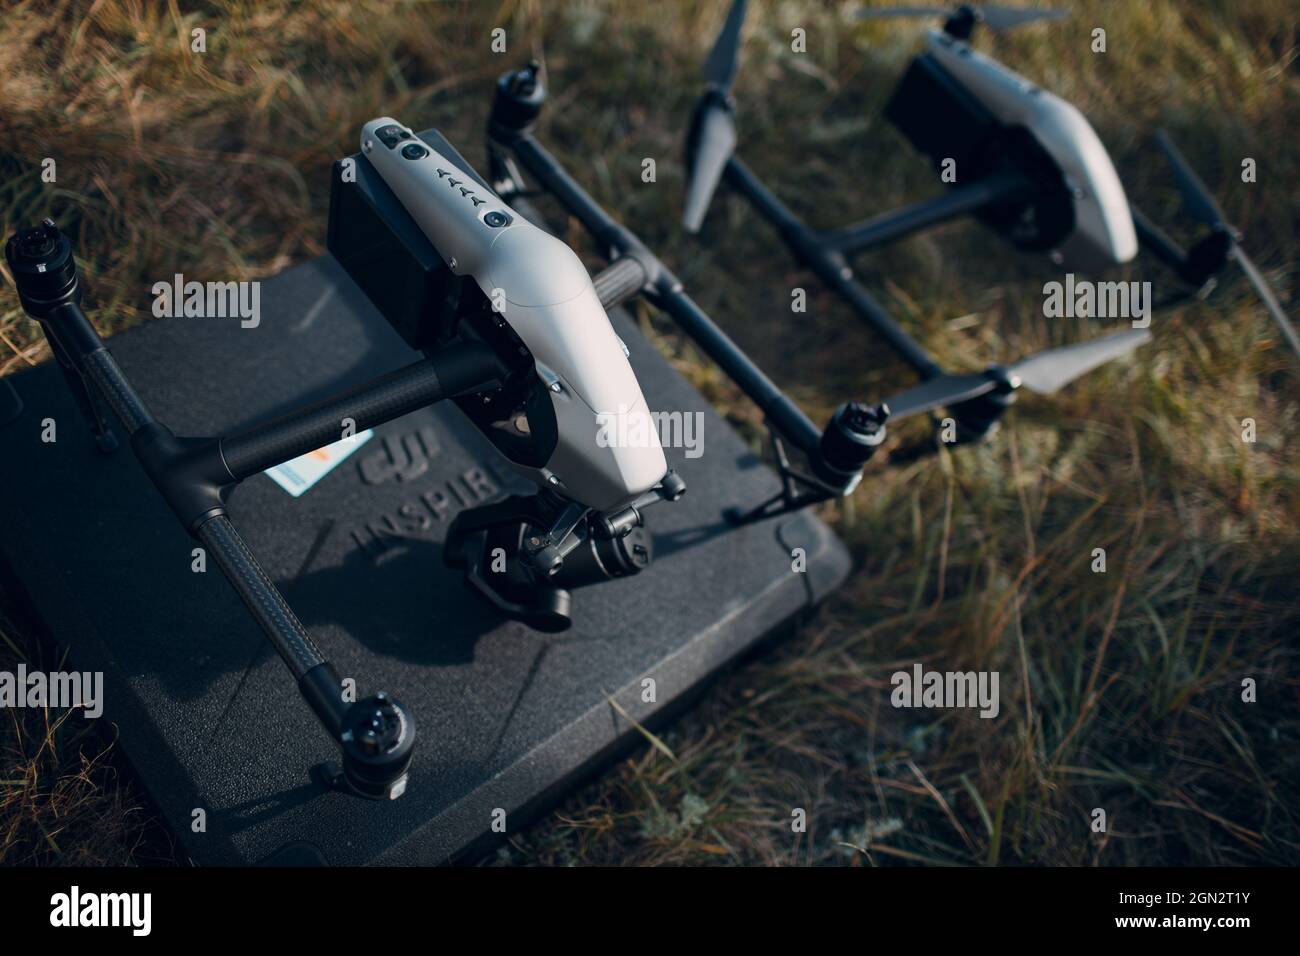 New York, USA - 18. SEPTEMBER 2021: DJI Inspire 2 Quadcopter-Drohne am Boden vor dem Flug und den Dreharbeiten Stockfoto